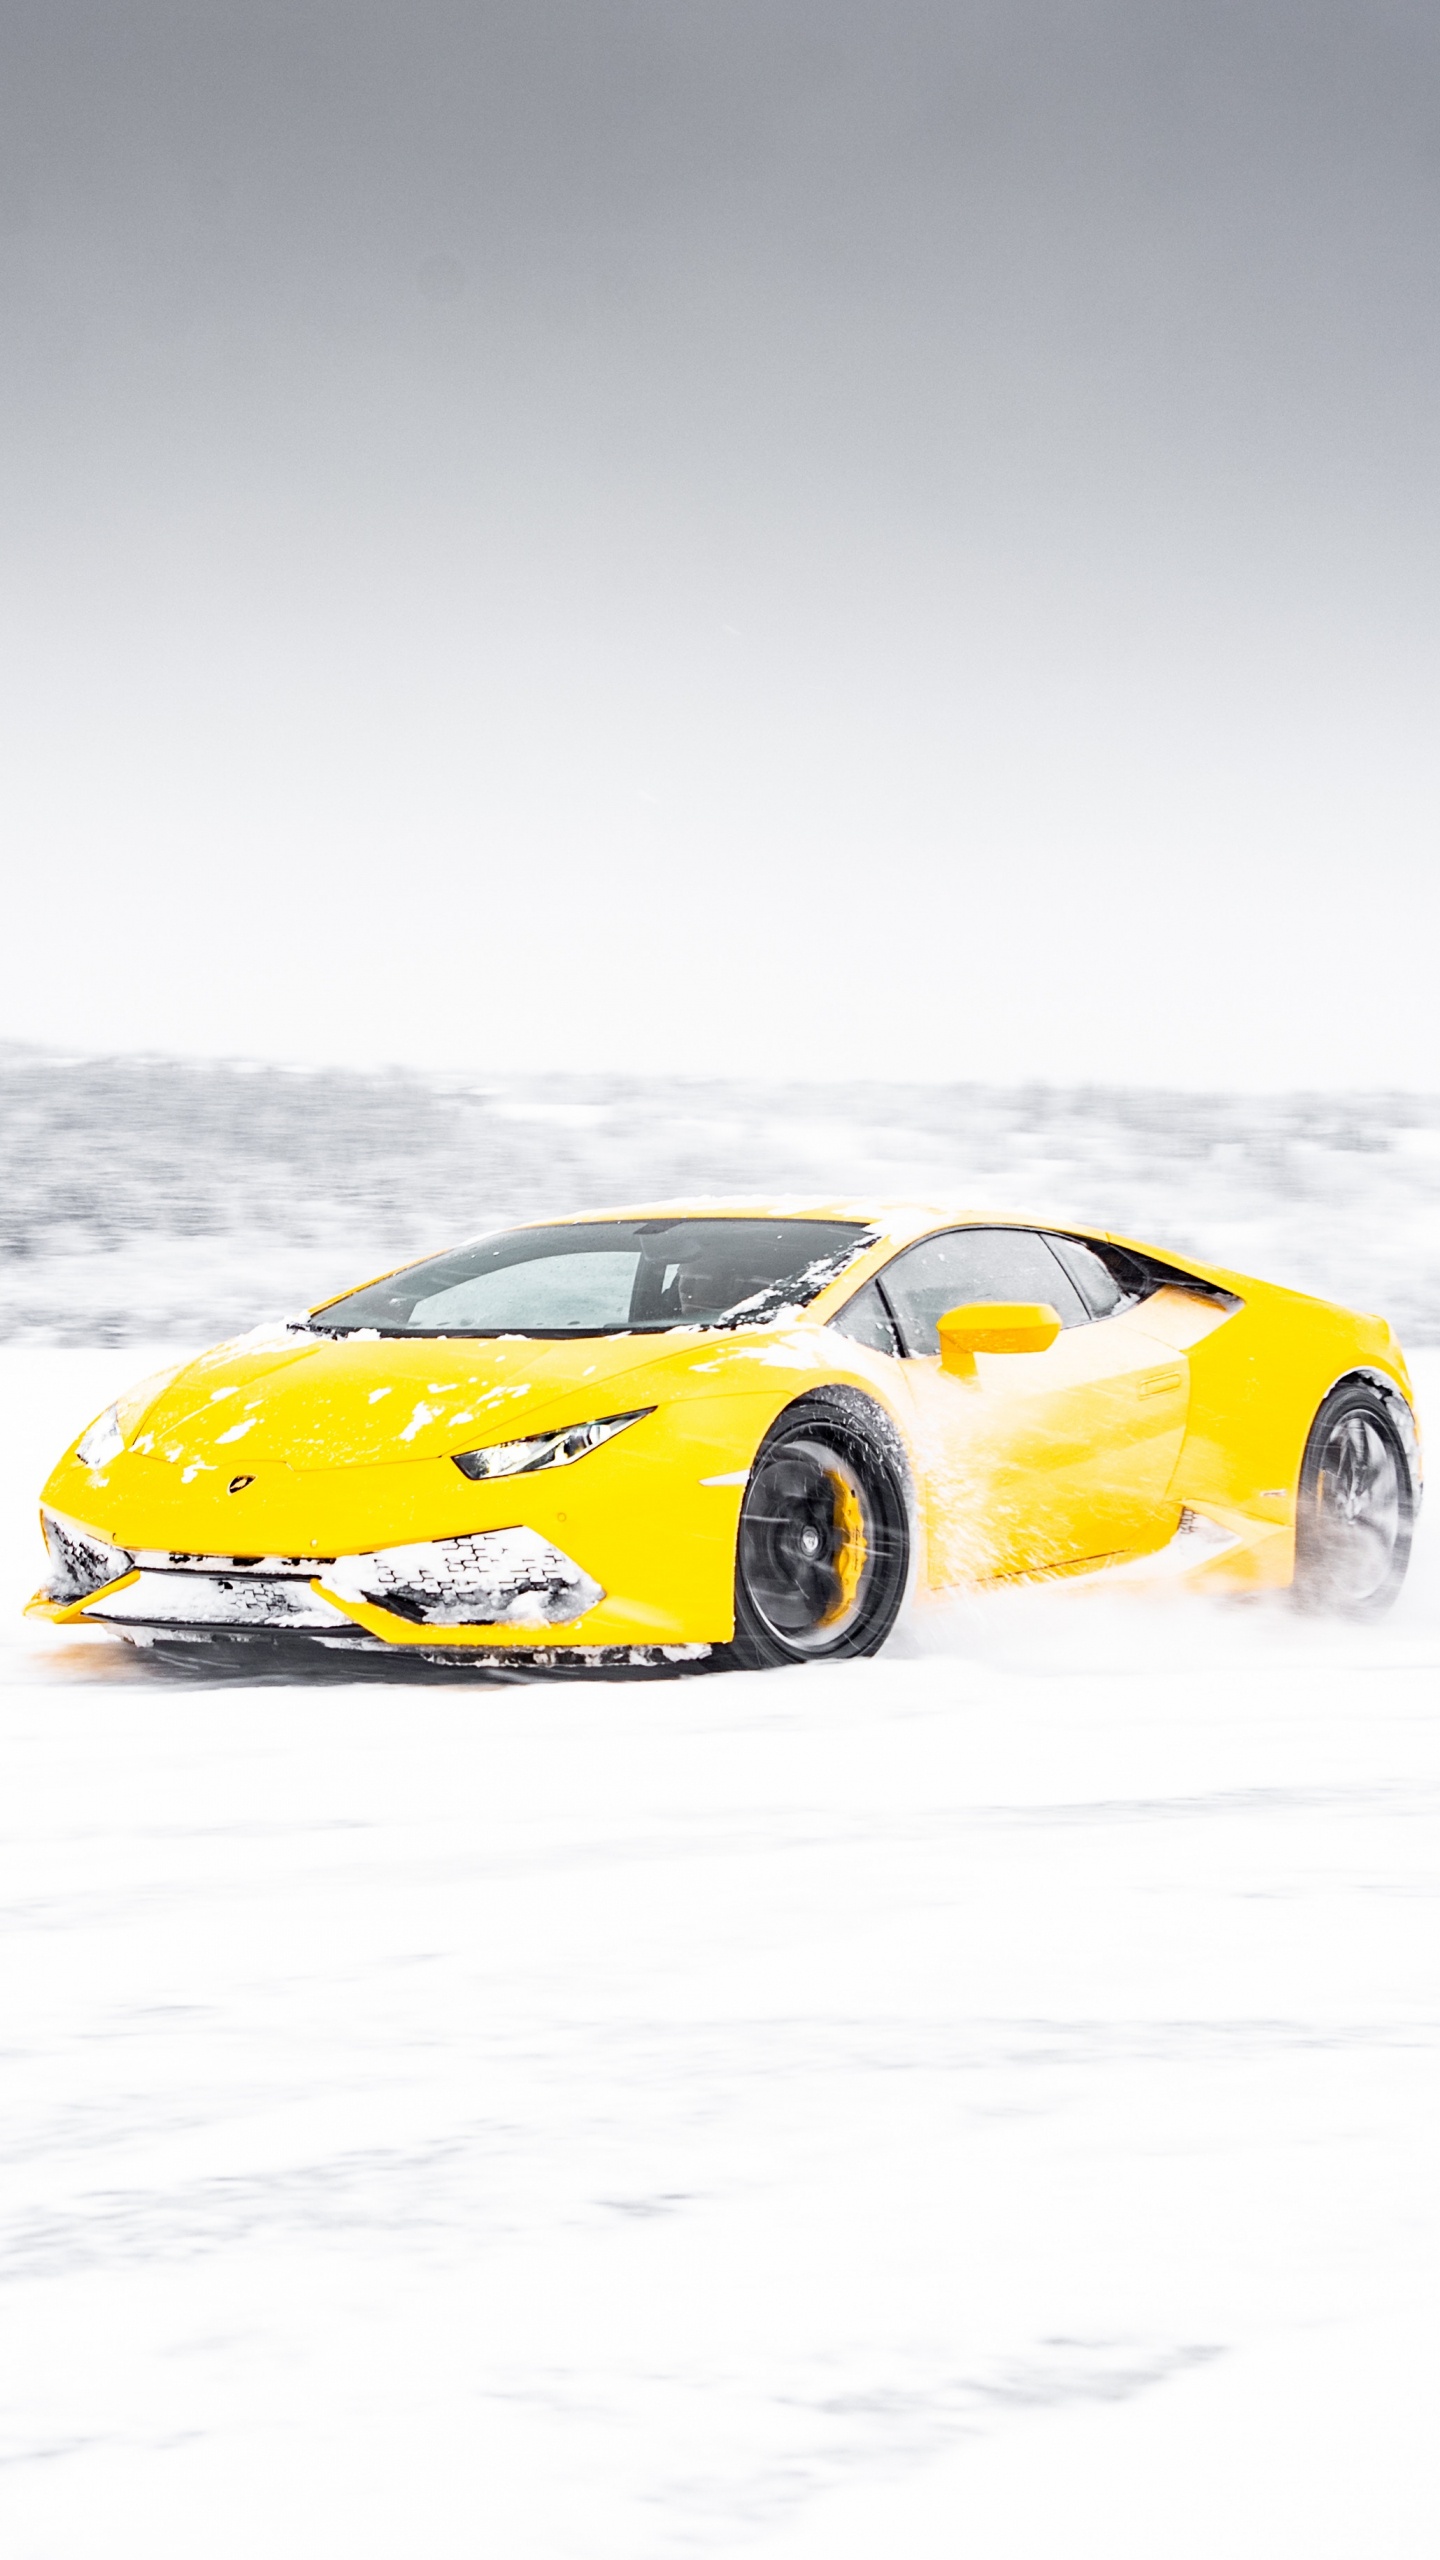 Yellow Ferrari 458 Italia on Snow Covered Ground. Wallpaper in 1440x2560 Resolution